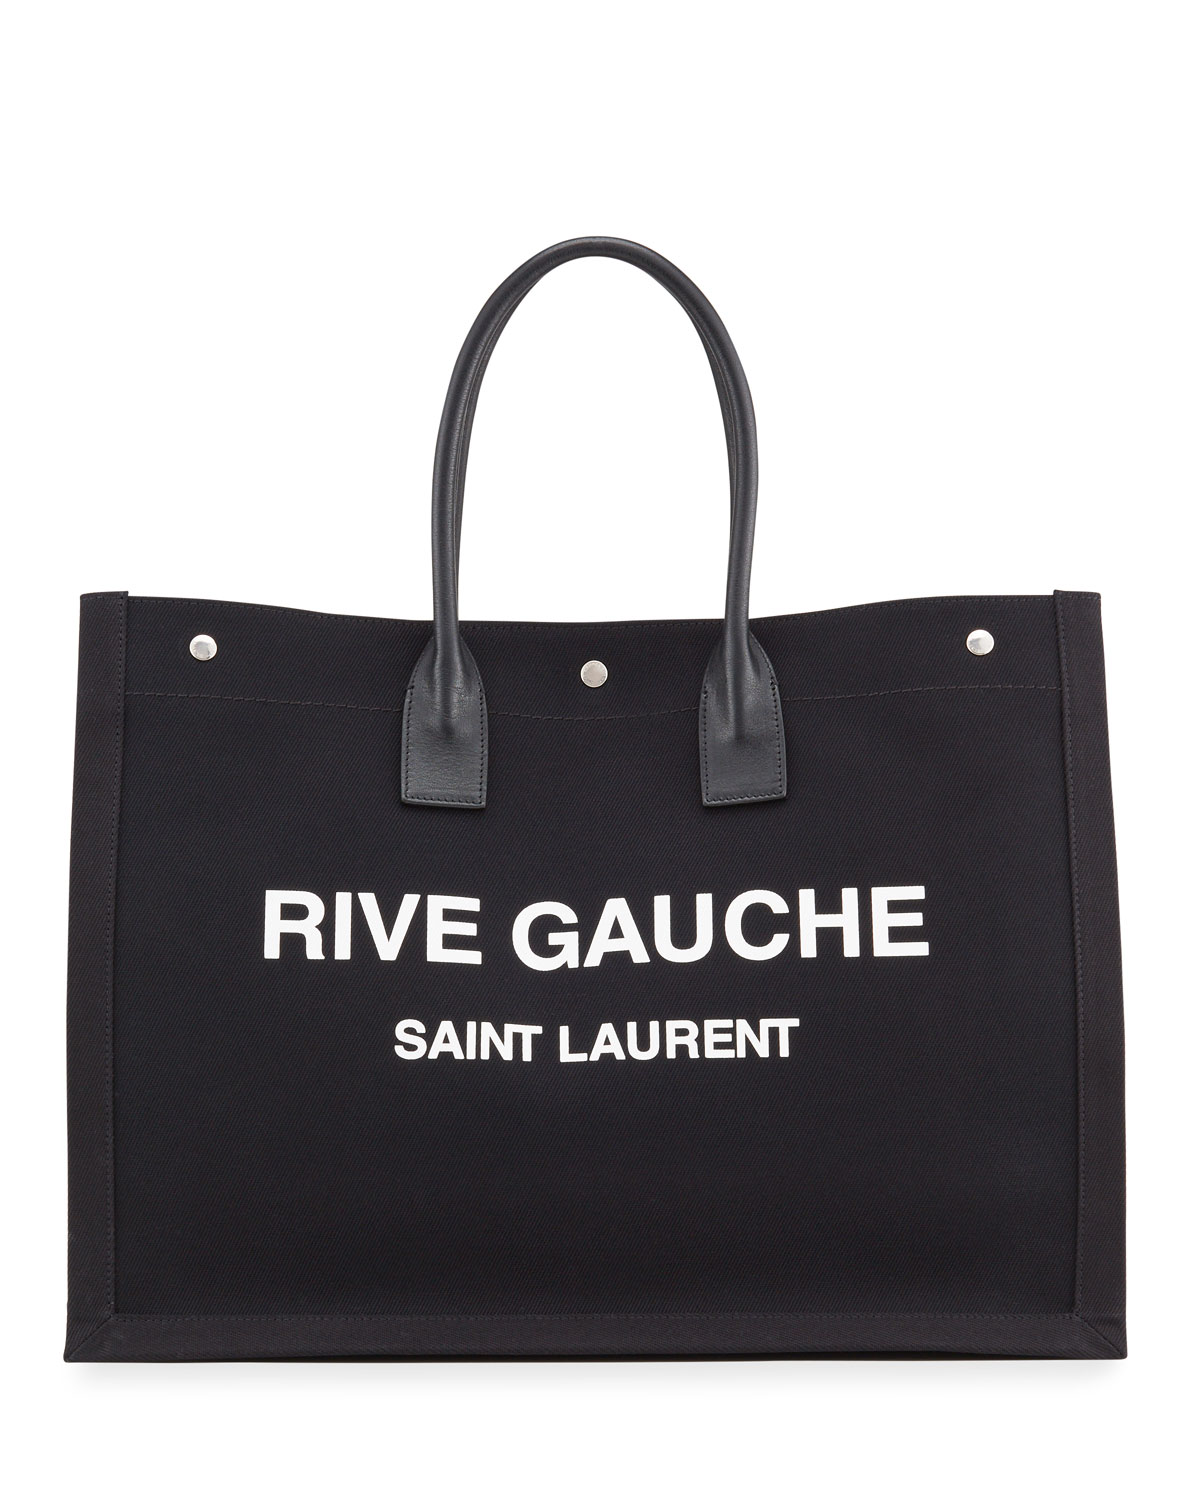 My Honest Review of the Saint Laurent Rive Gauche Tote - Mia Mia Mine